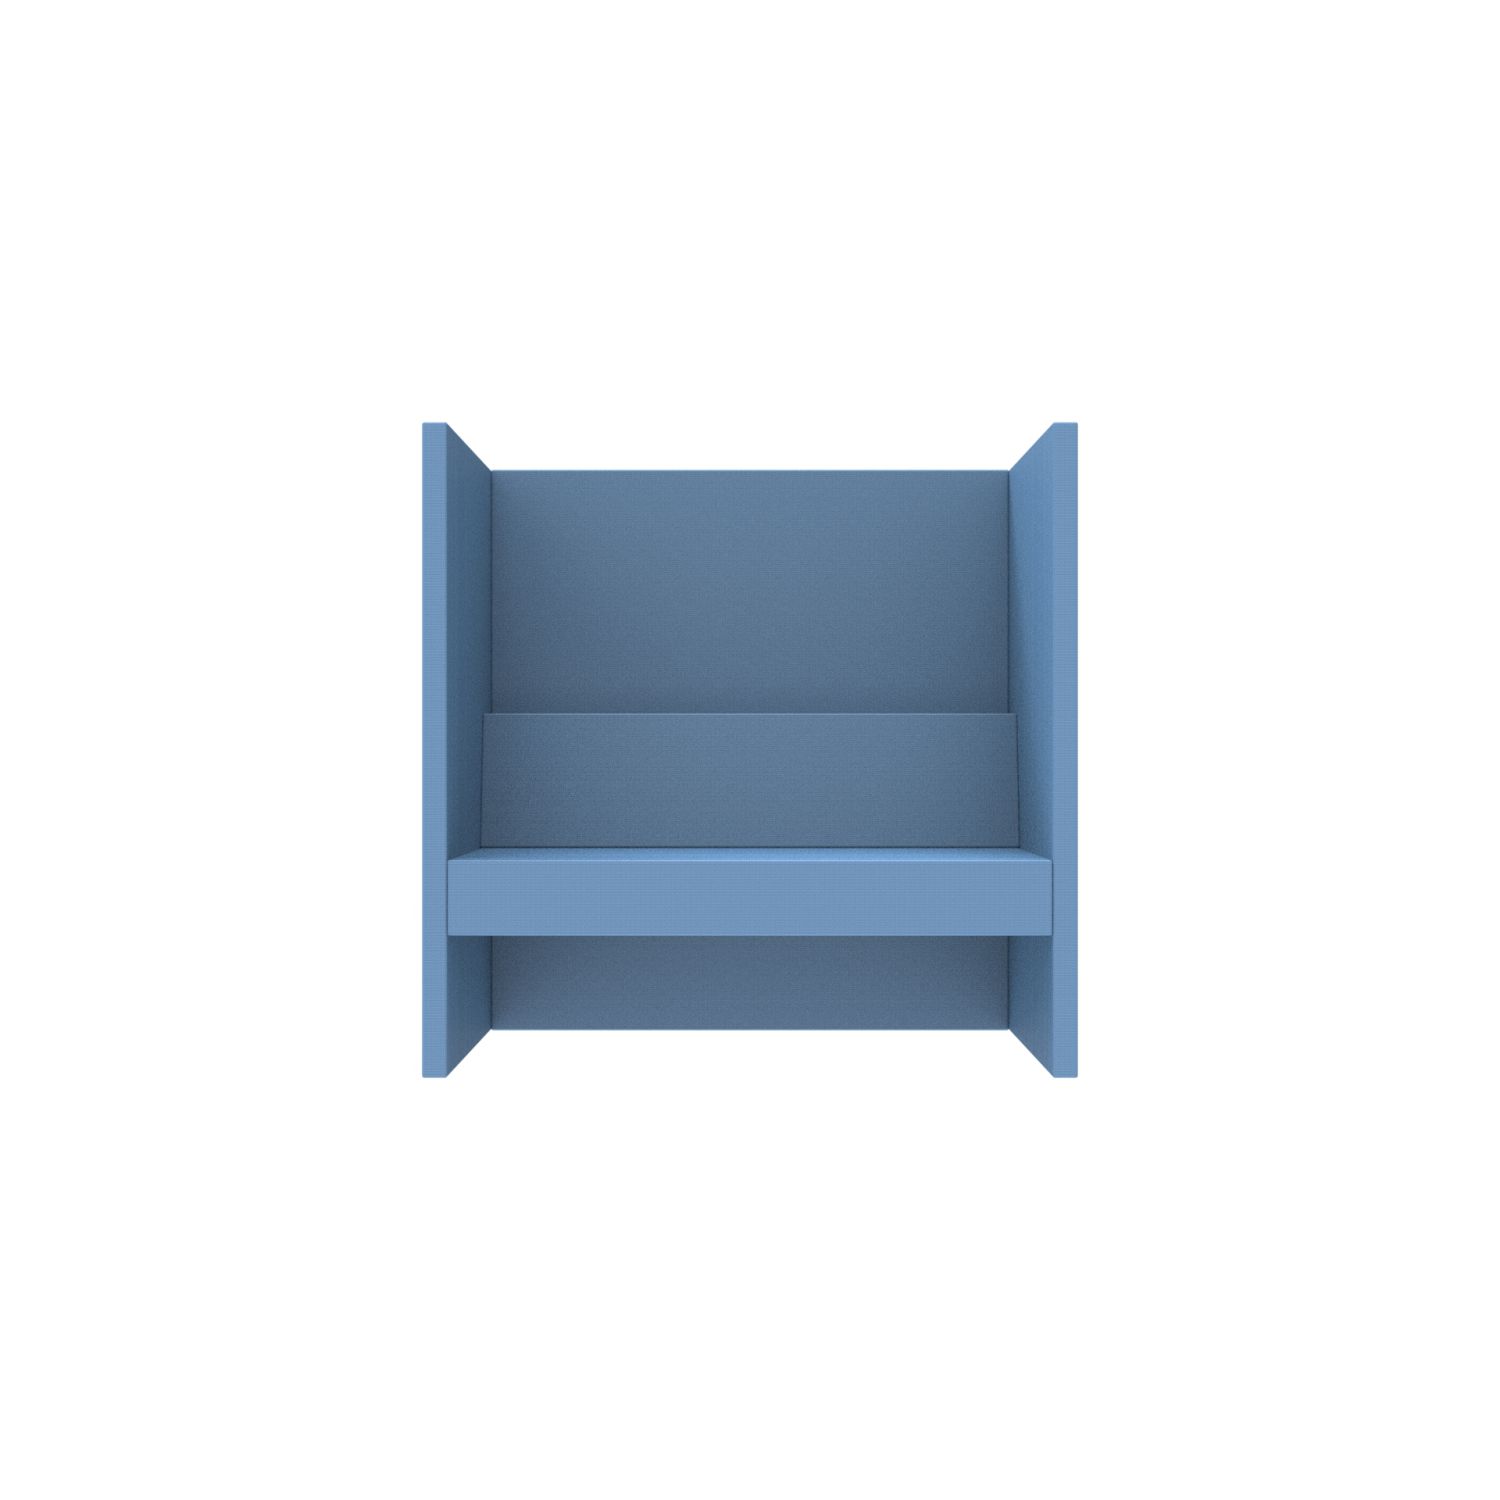 lensvelt rick minkes no idea sofa high back width 136 cm depth 73 cm height 130 cm blue horizon 040 black ral9005